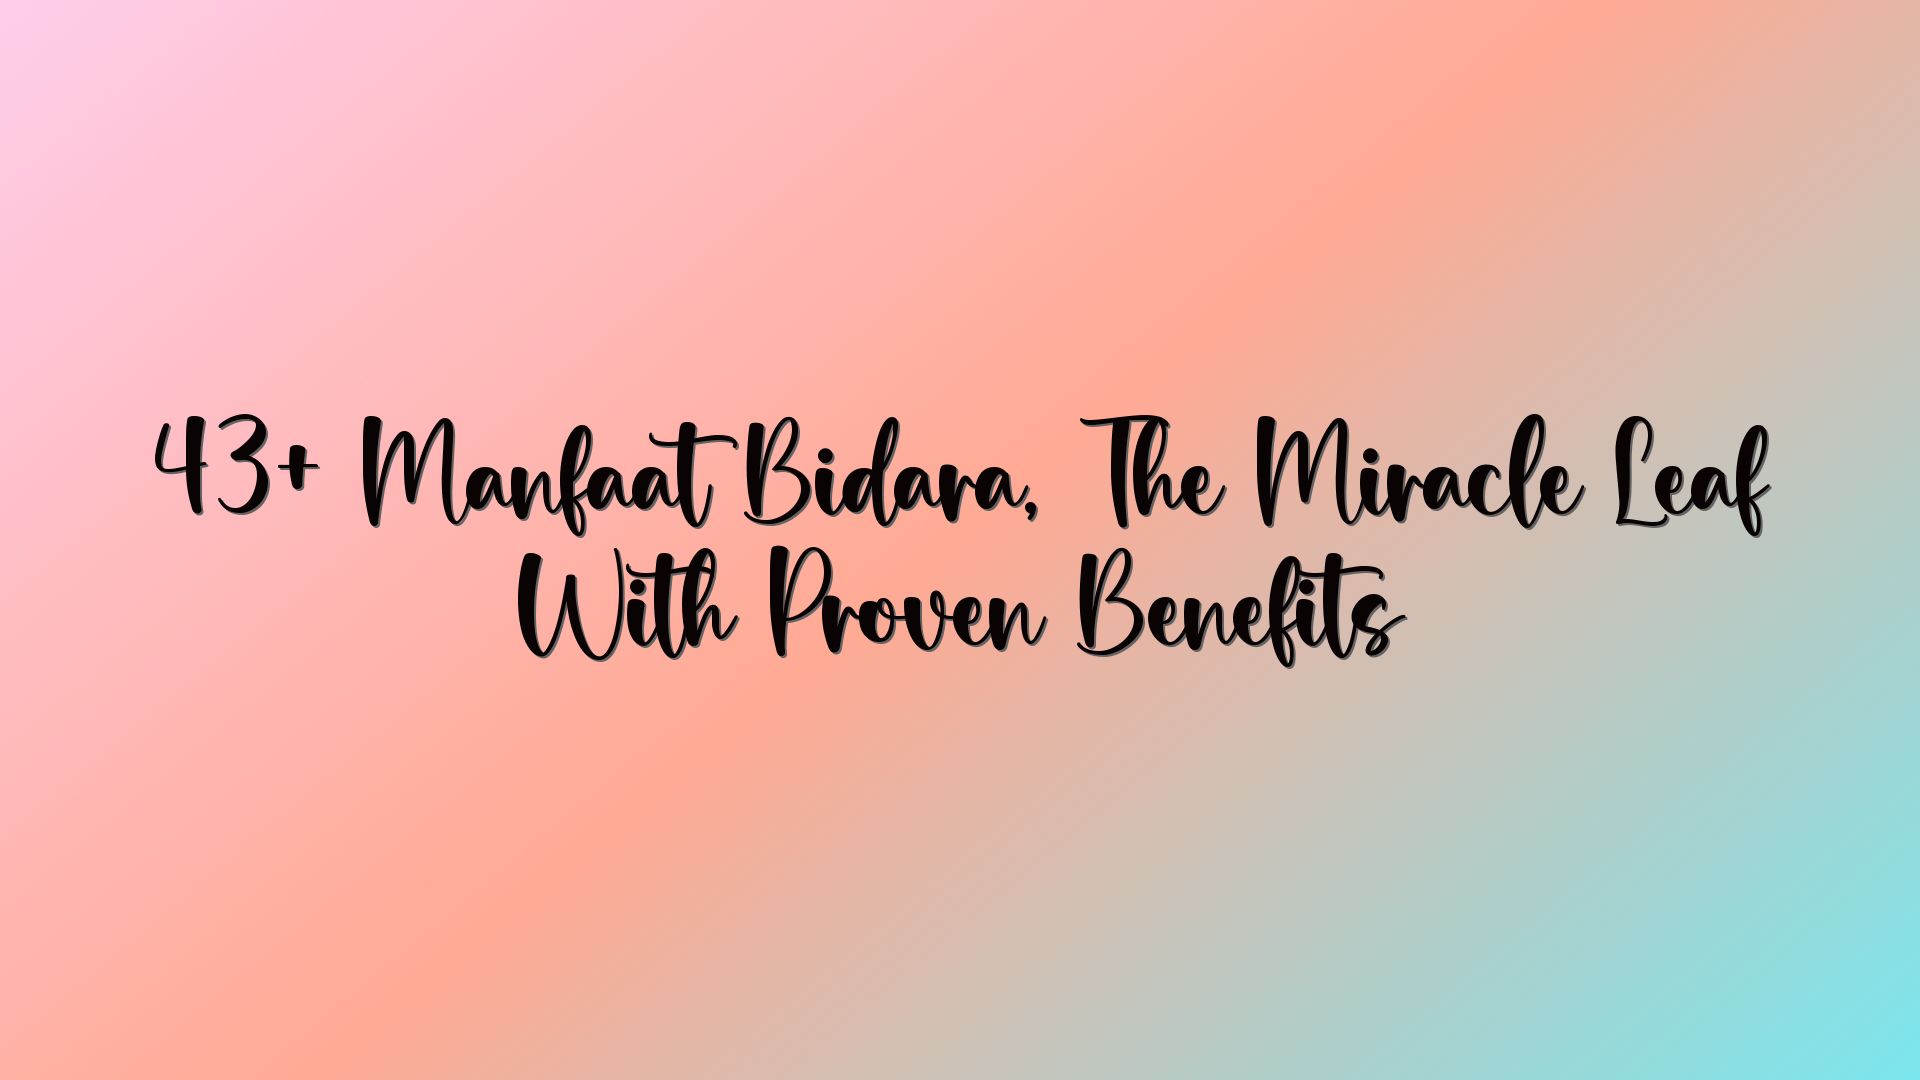 43+ Manfaat Bidara, The Miracle Leaf With Proven Benefits